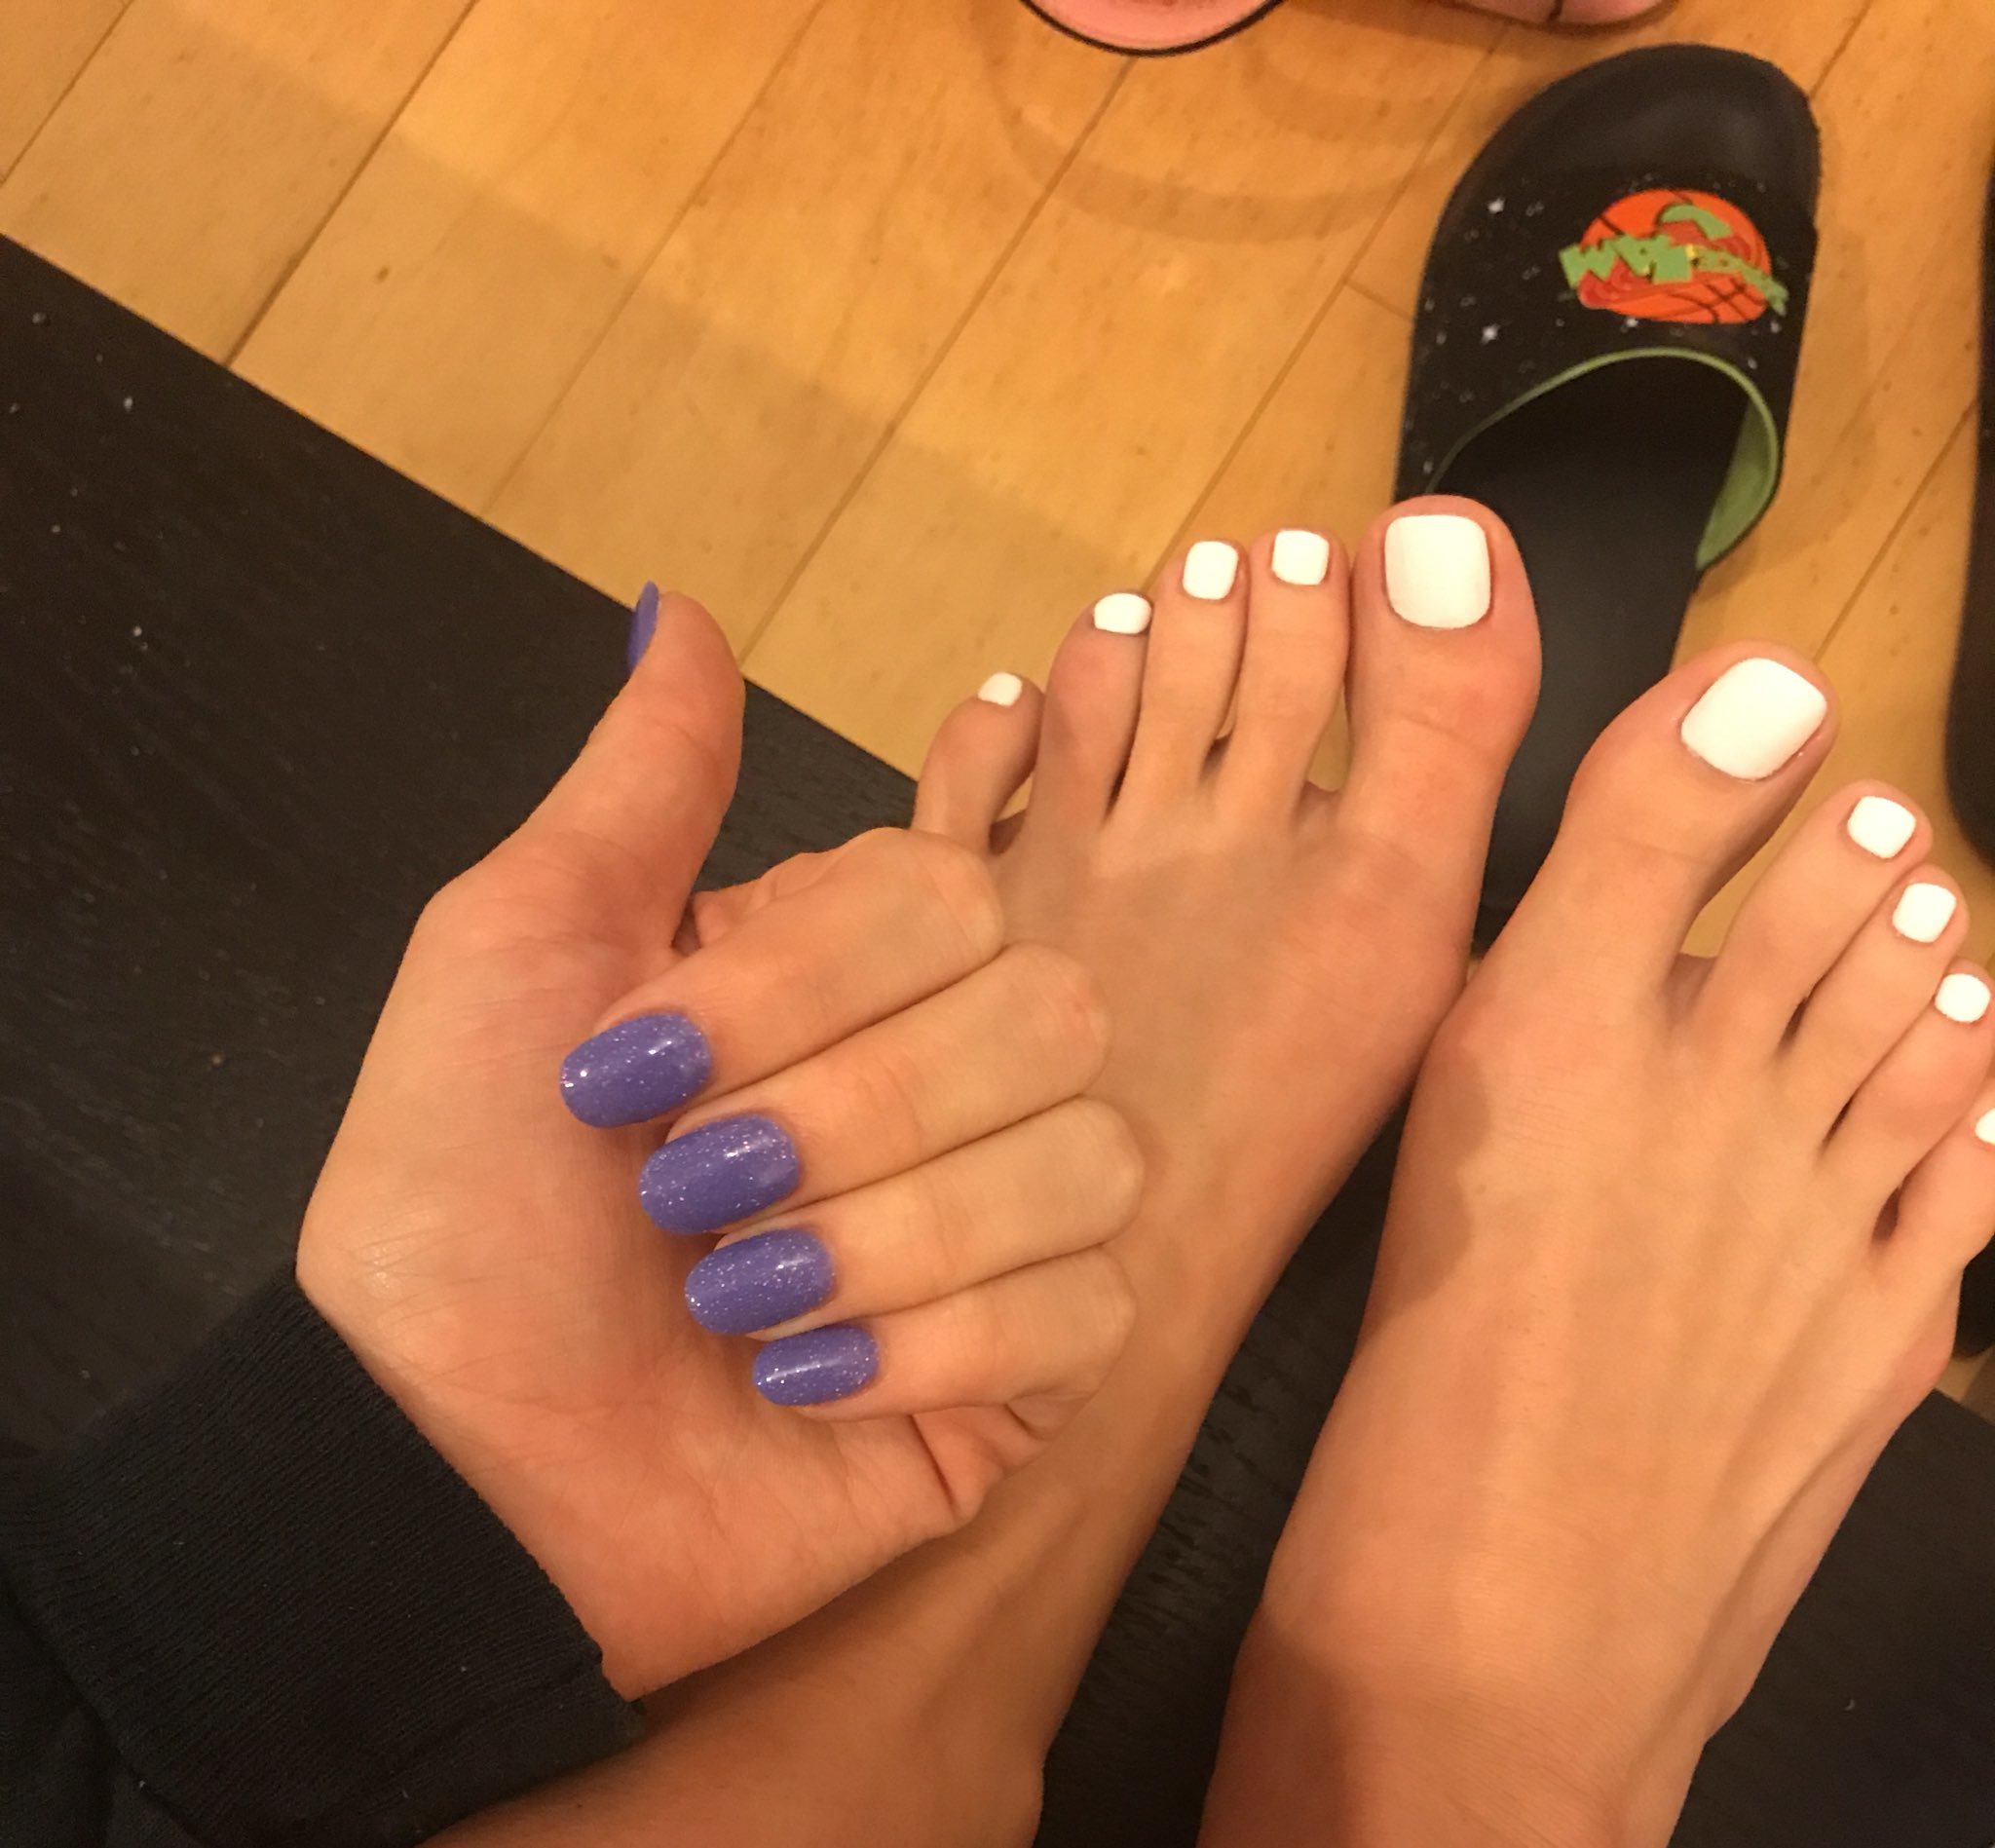 Jill Kassidys Feet